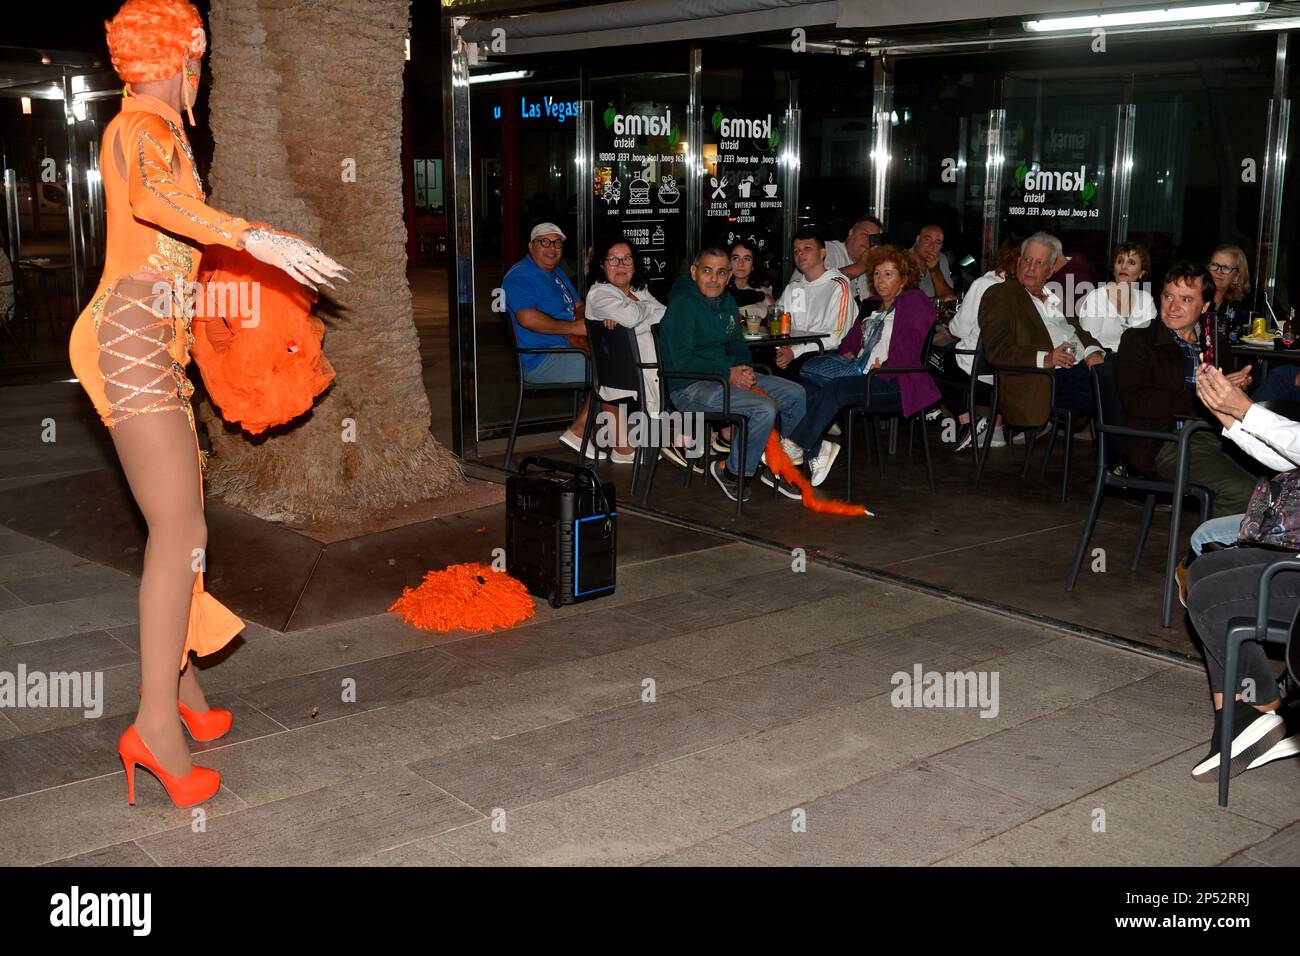 Drag artist, Street busker in burlesque spettacolo serale al bar esterno (Sala de juego Las Vegas) ad Arinaga, Gran Canaria Foto Stock